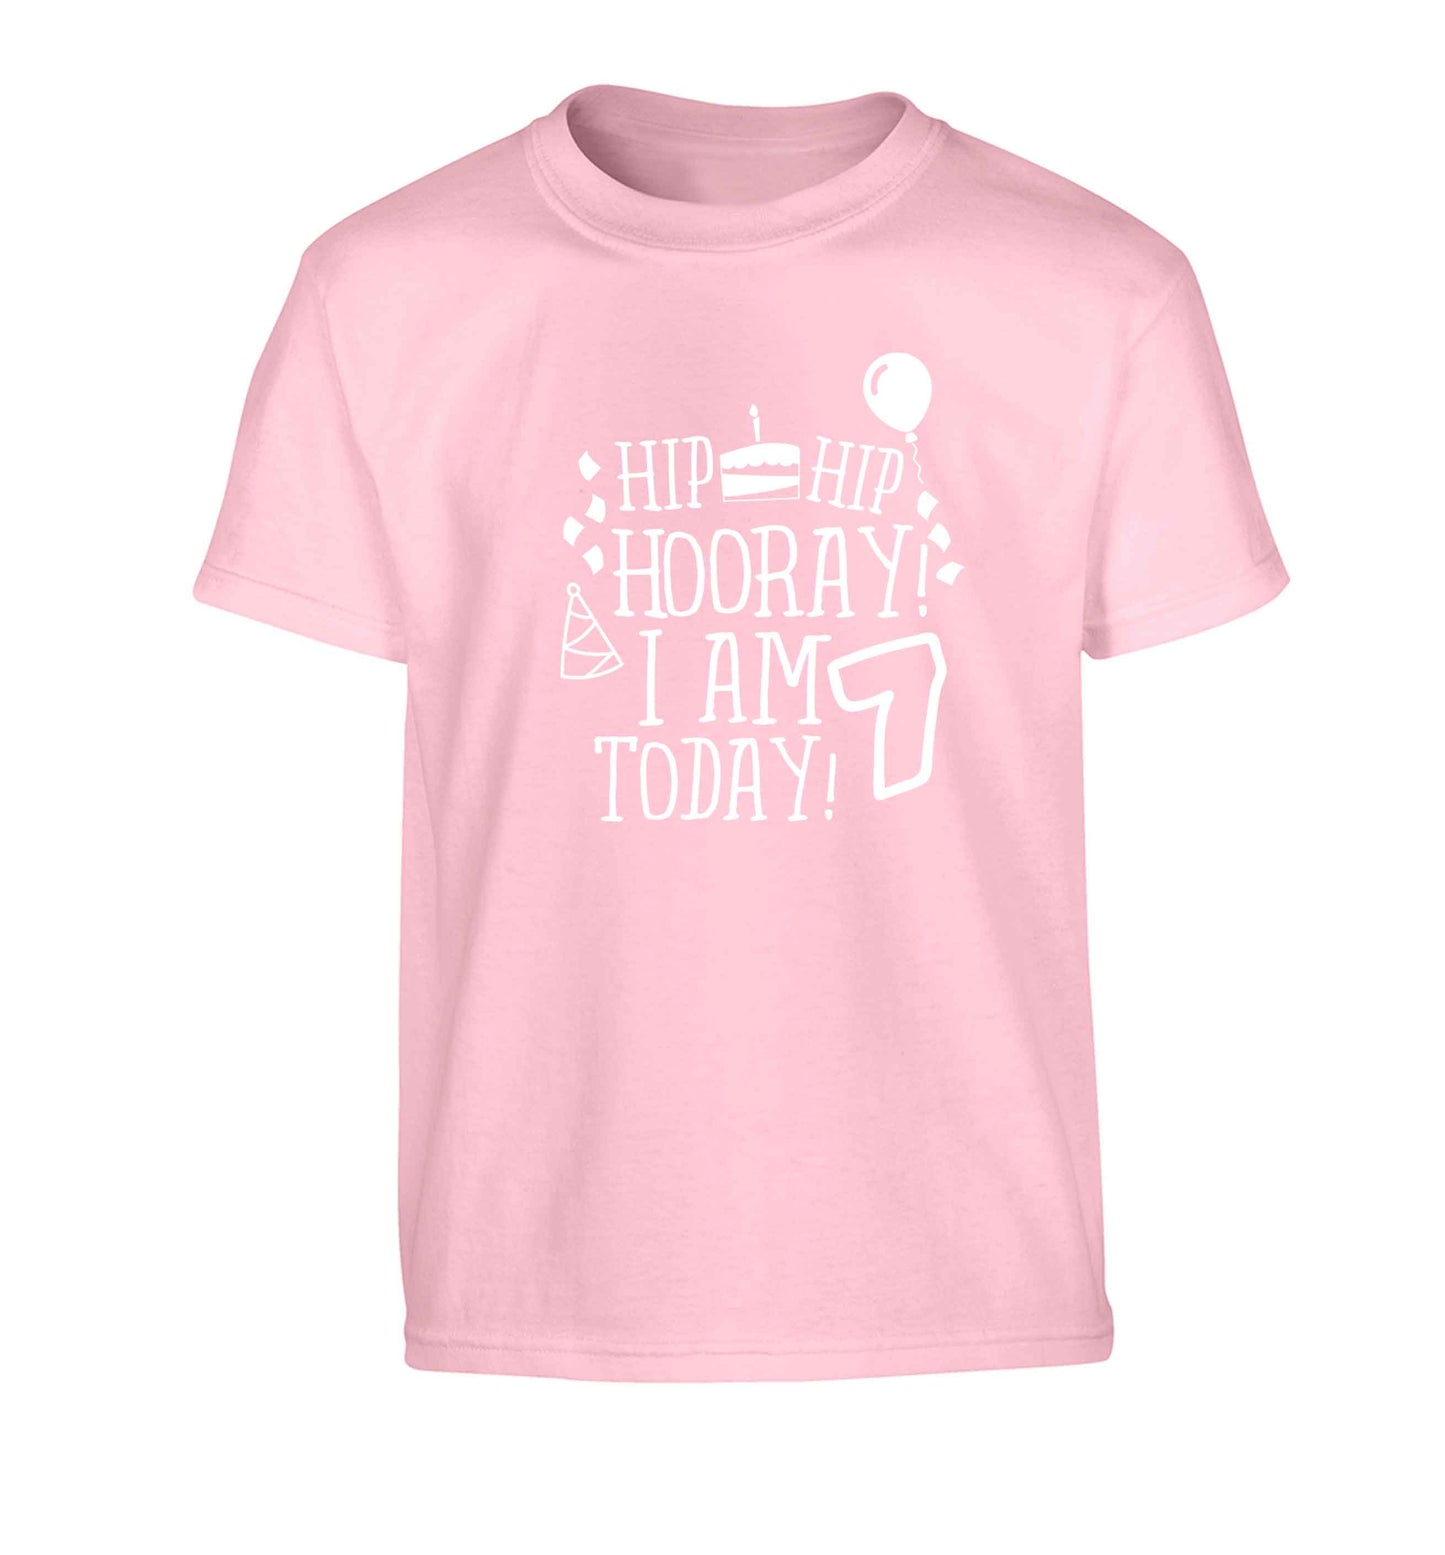 Hip hip I am seven today! Children's light pink Tshirt 12-13 Years